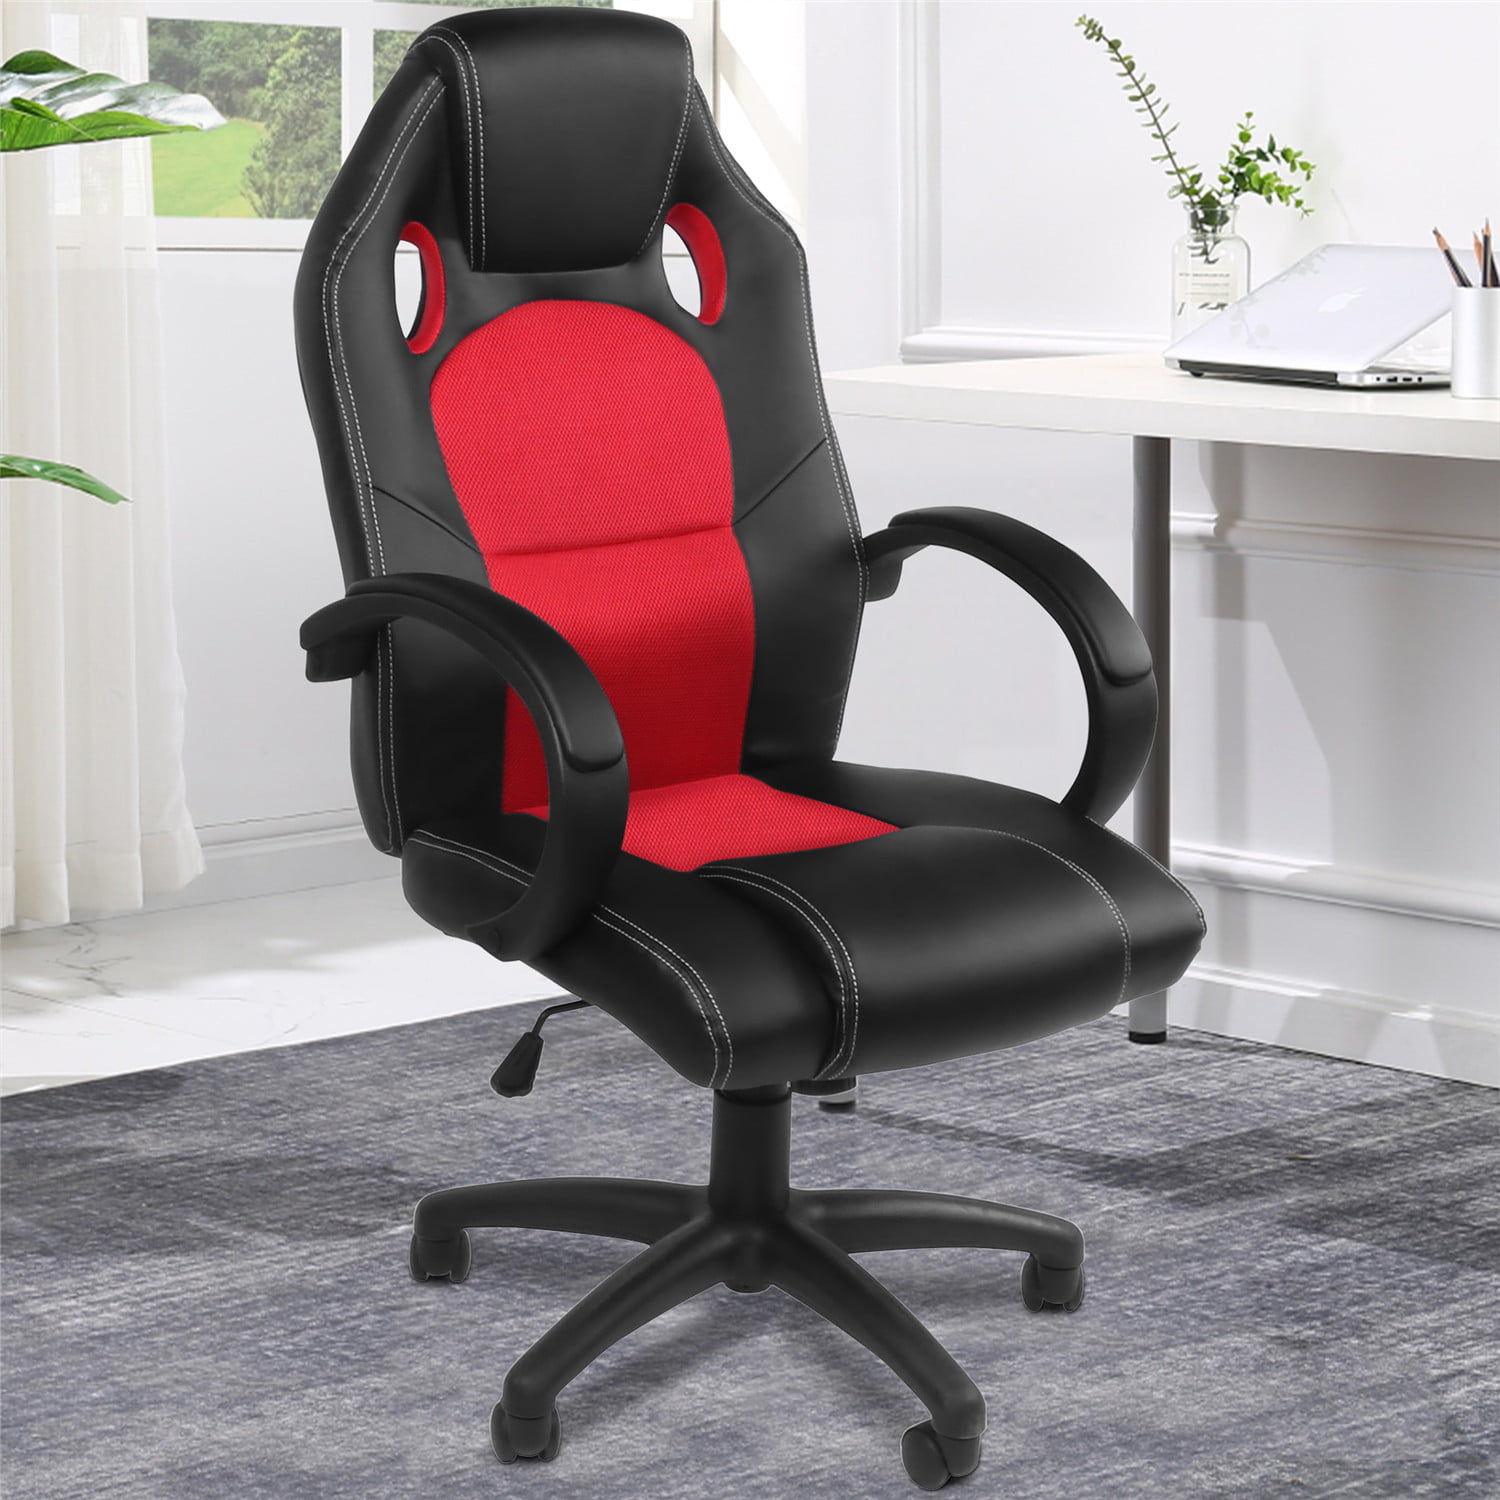 Homepraise Ergonomic Computer Chair High Back Leather Office Desk Chair